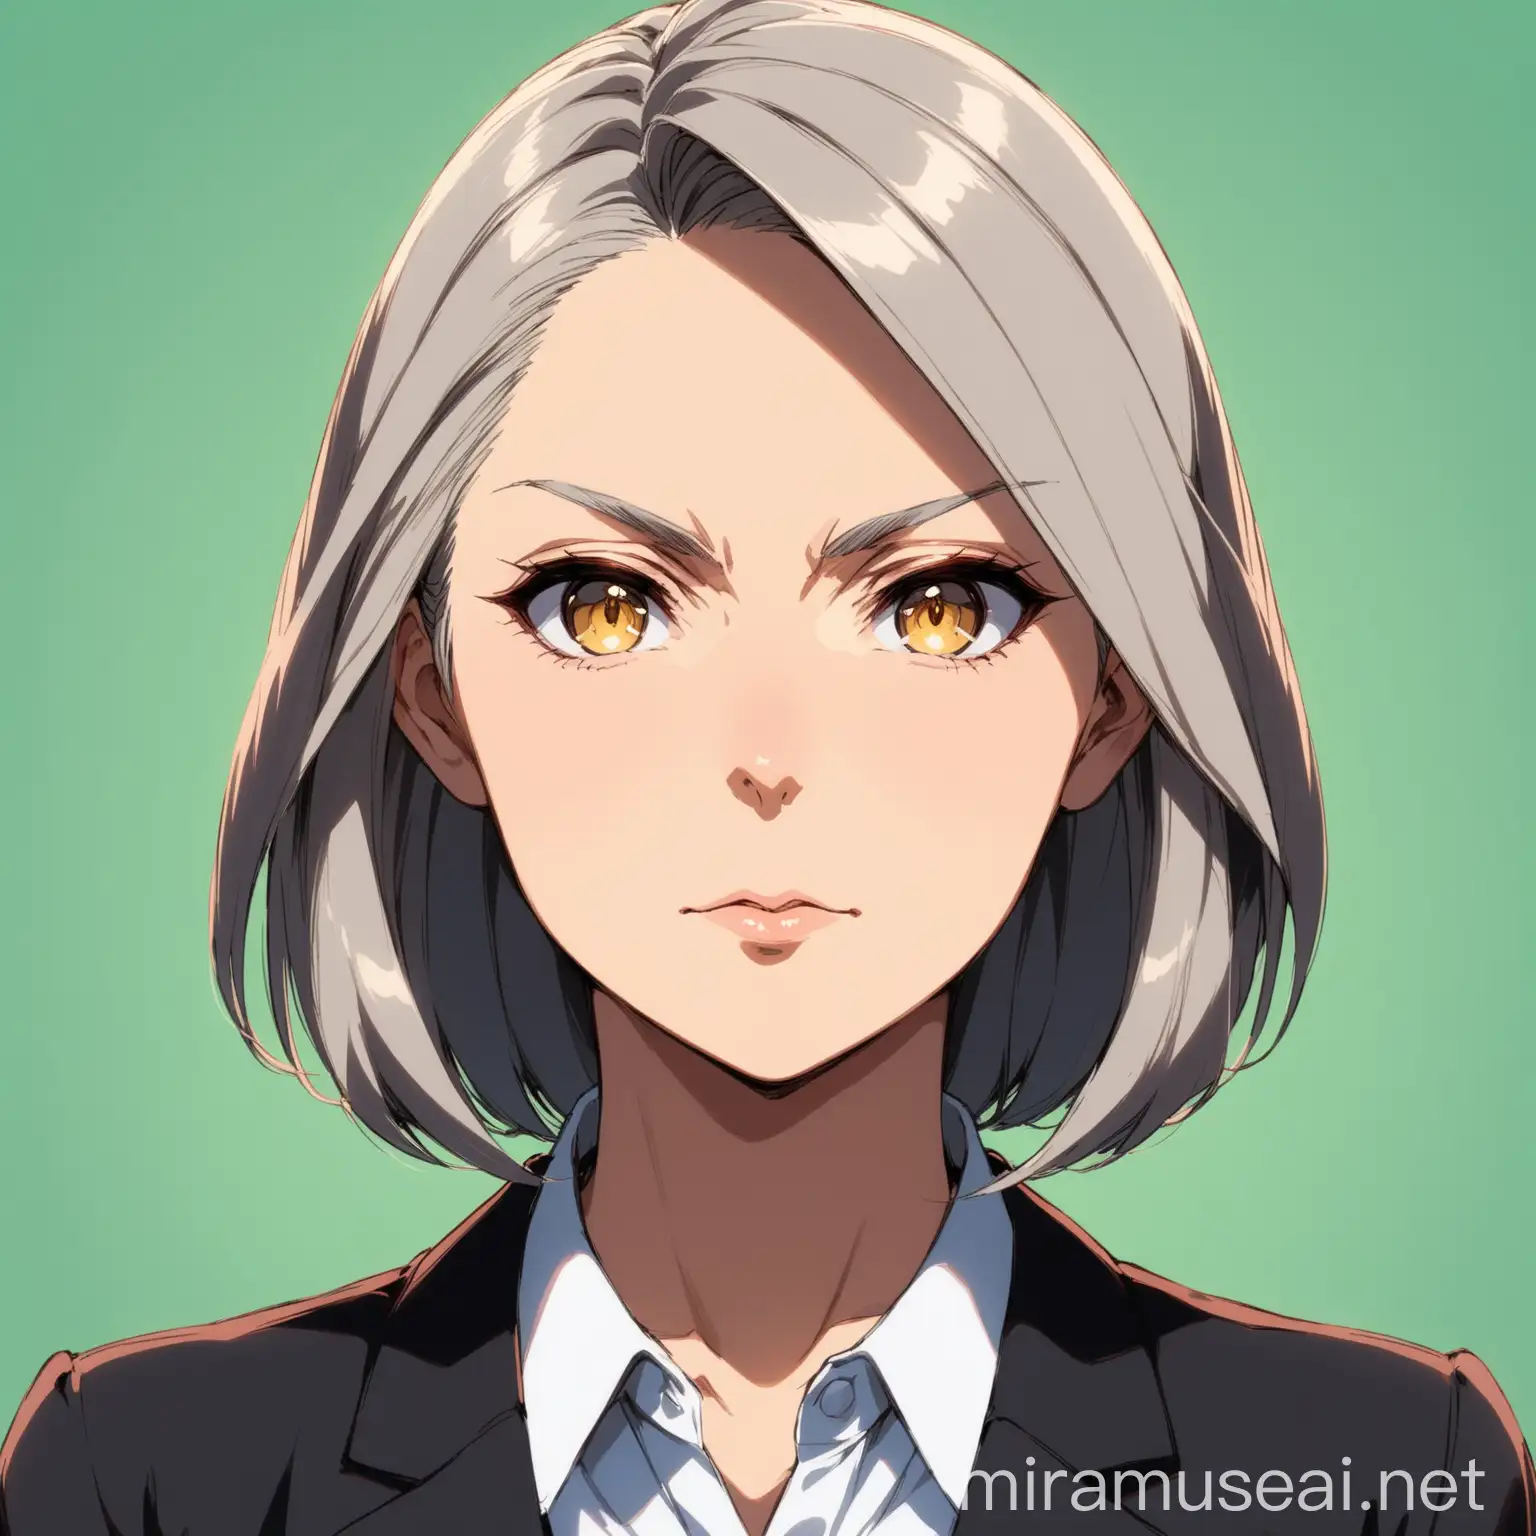 Serious AnimeStyle Portrait of a Mature Woman Teacher